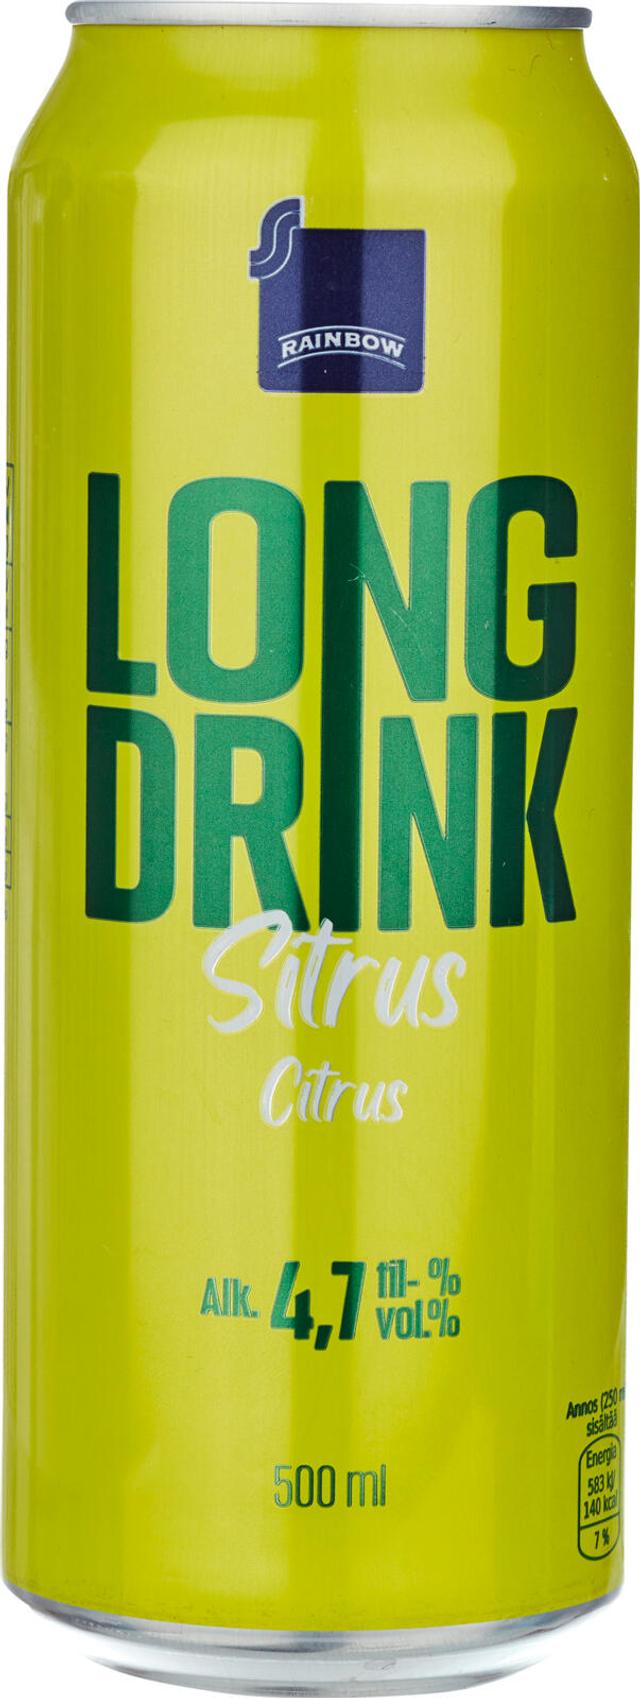 Rainbow Sitrus 4,7% 0,5L long drink